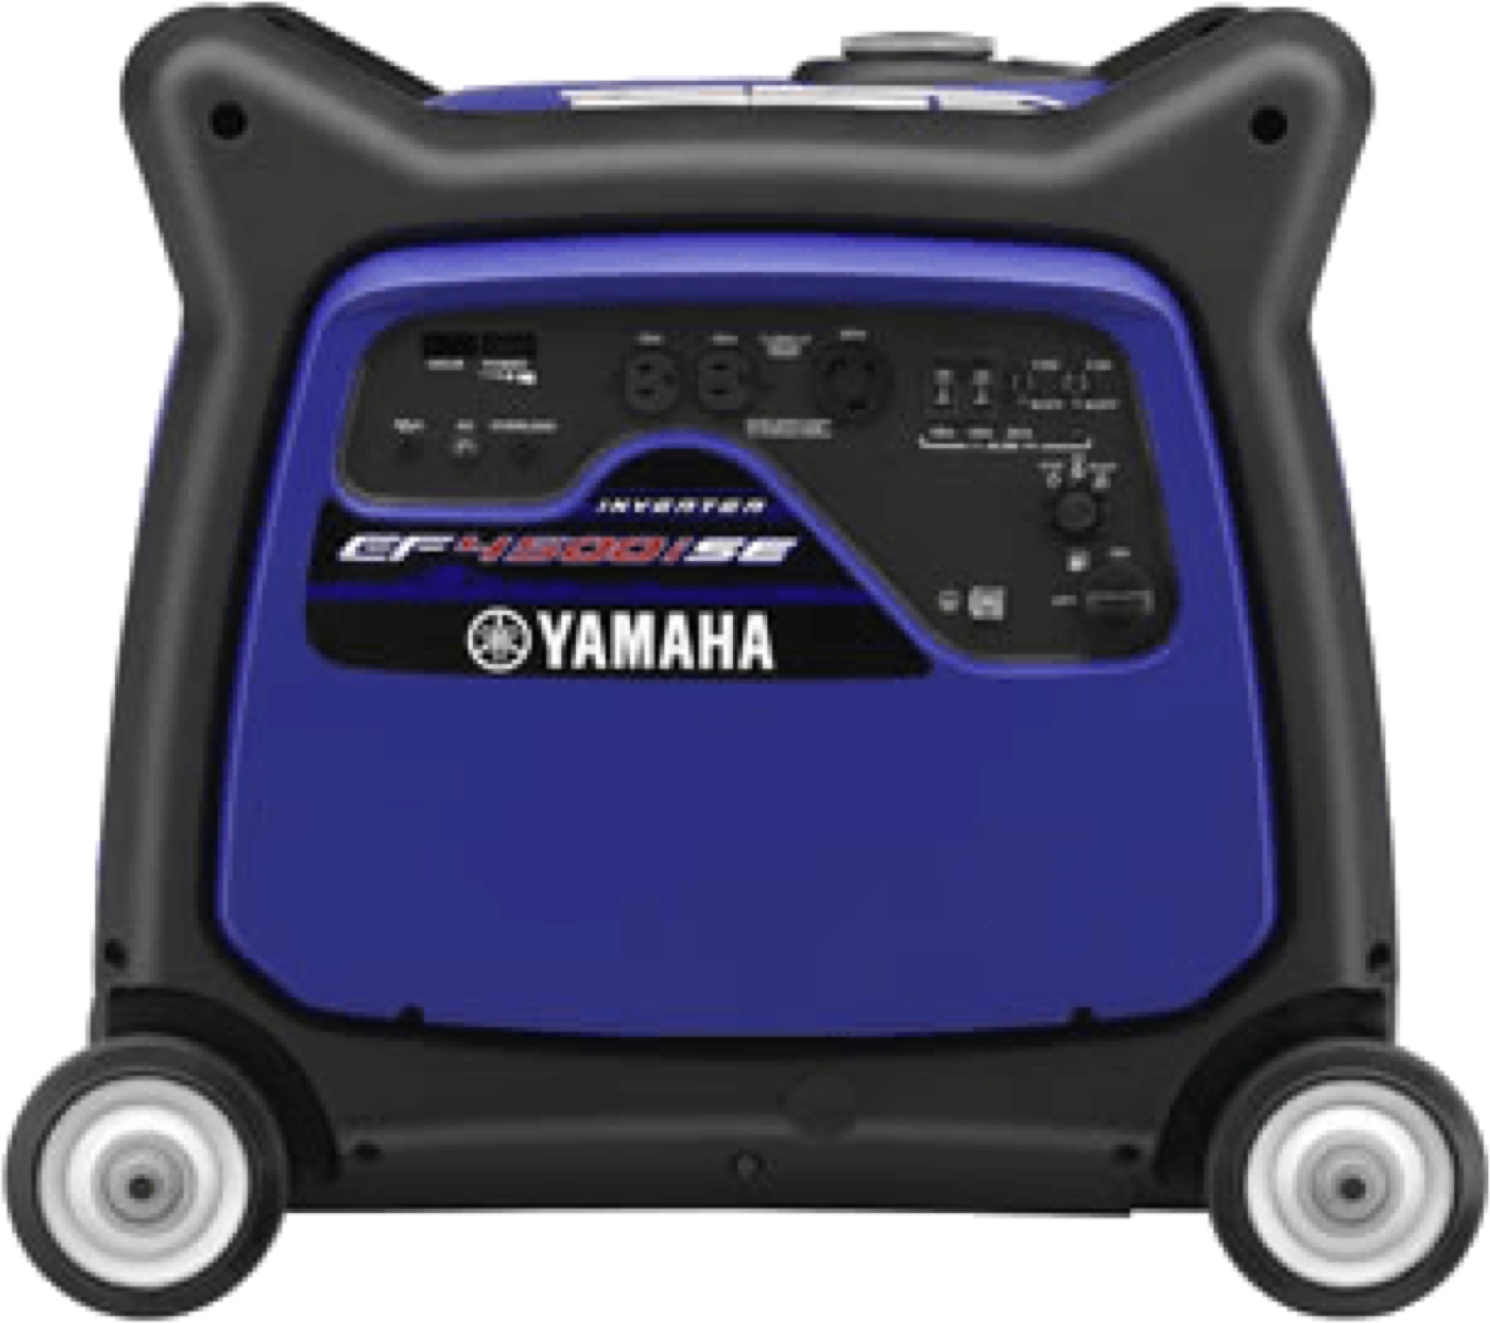  Yamaha Inverter Series EF4500ISE